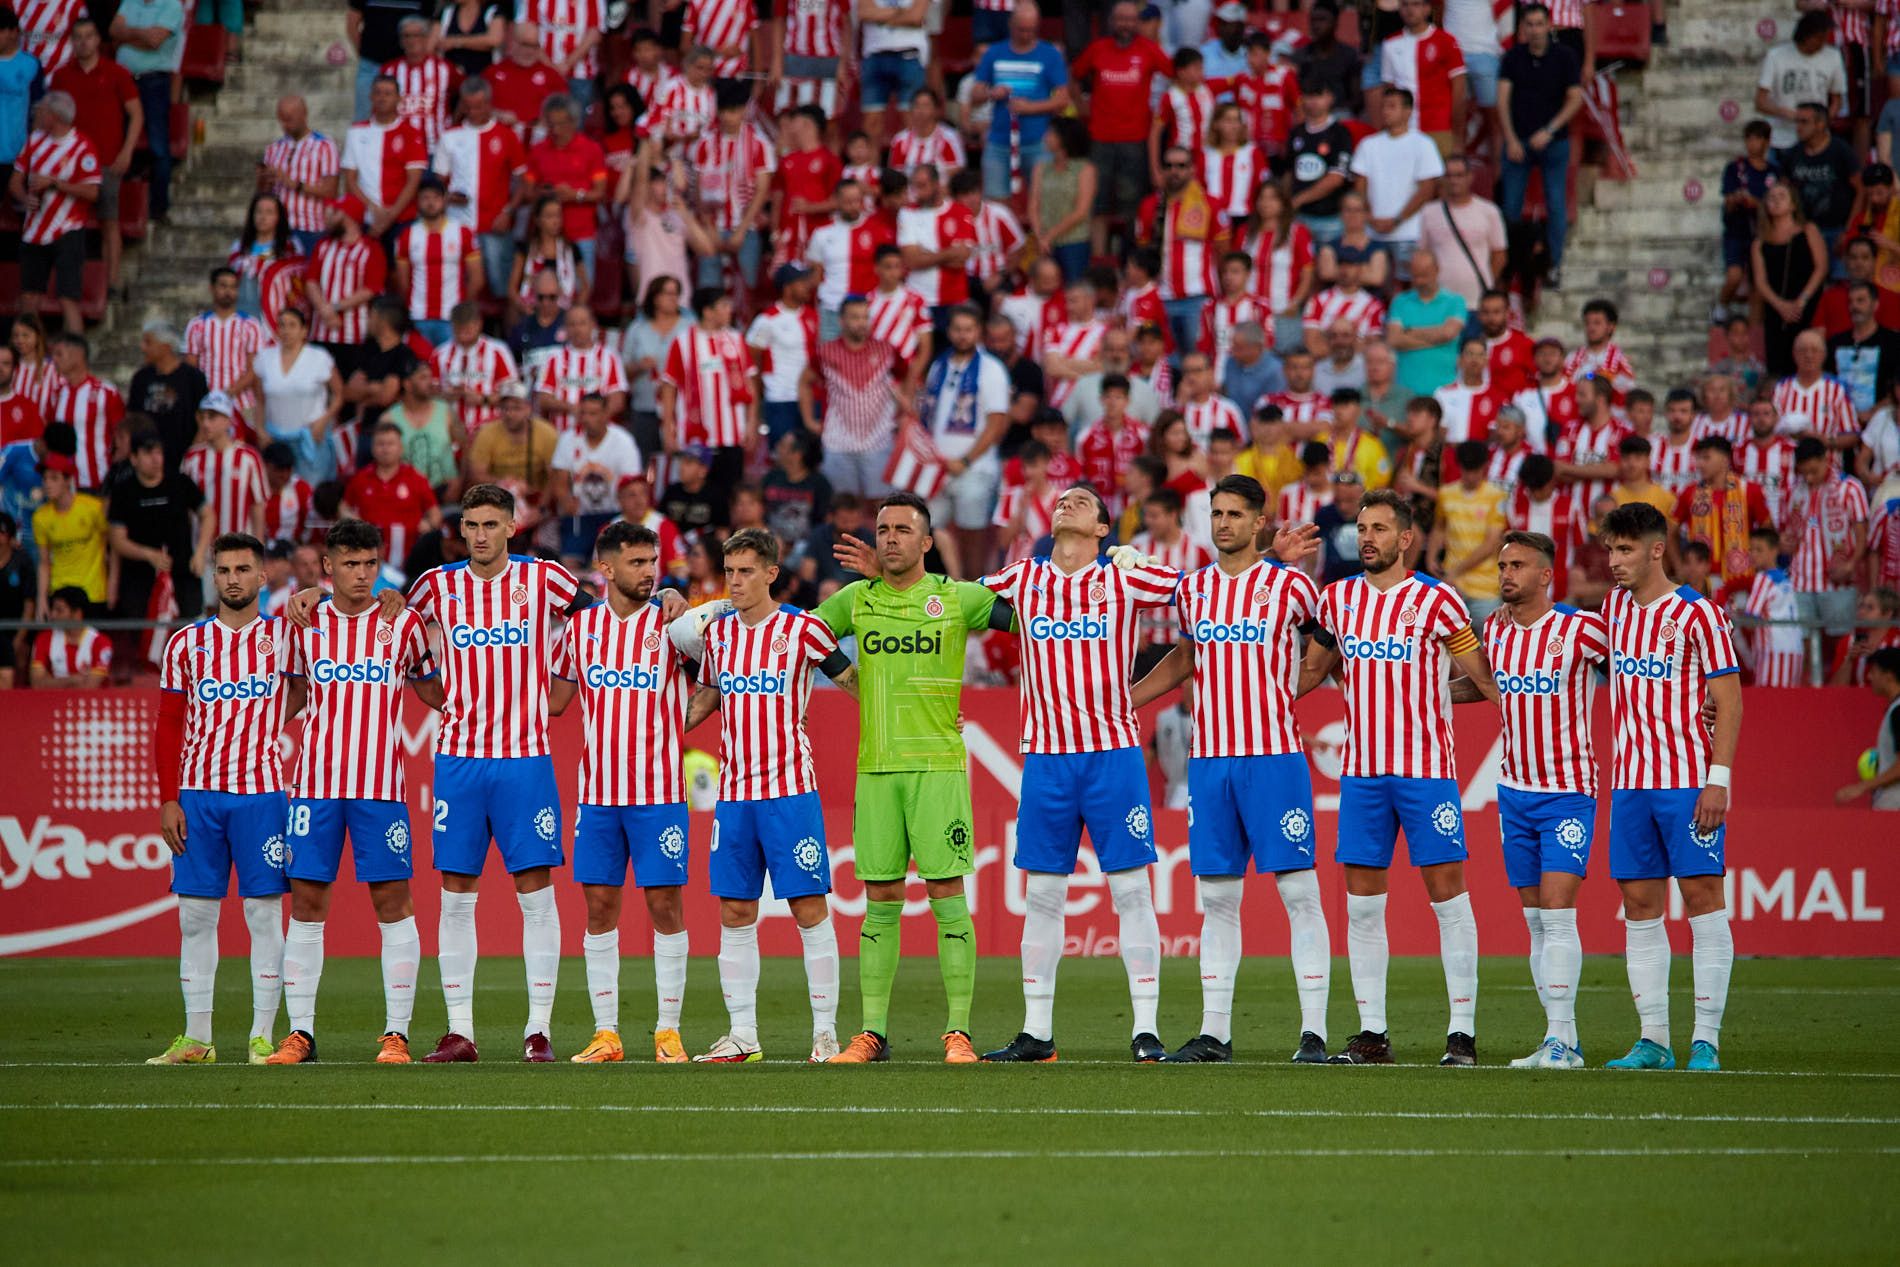 Girona FC, ketika berhadapan dengan Tenerife CF di kompetisi LaLiga Smartbank musim lalu.